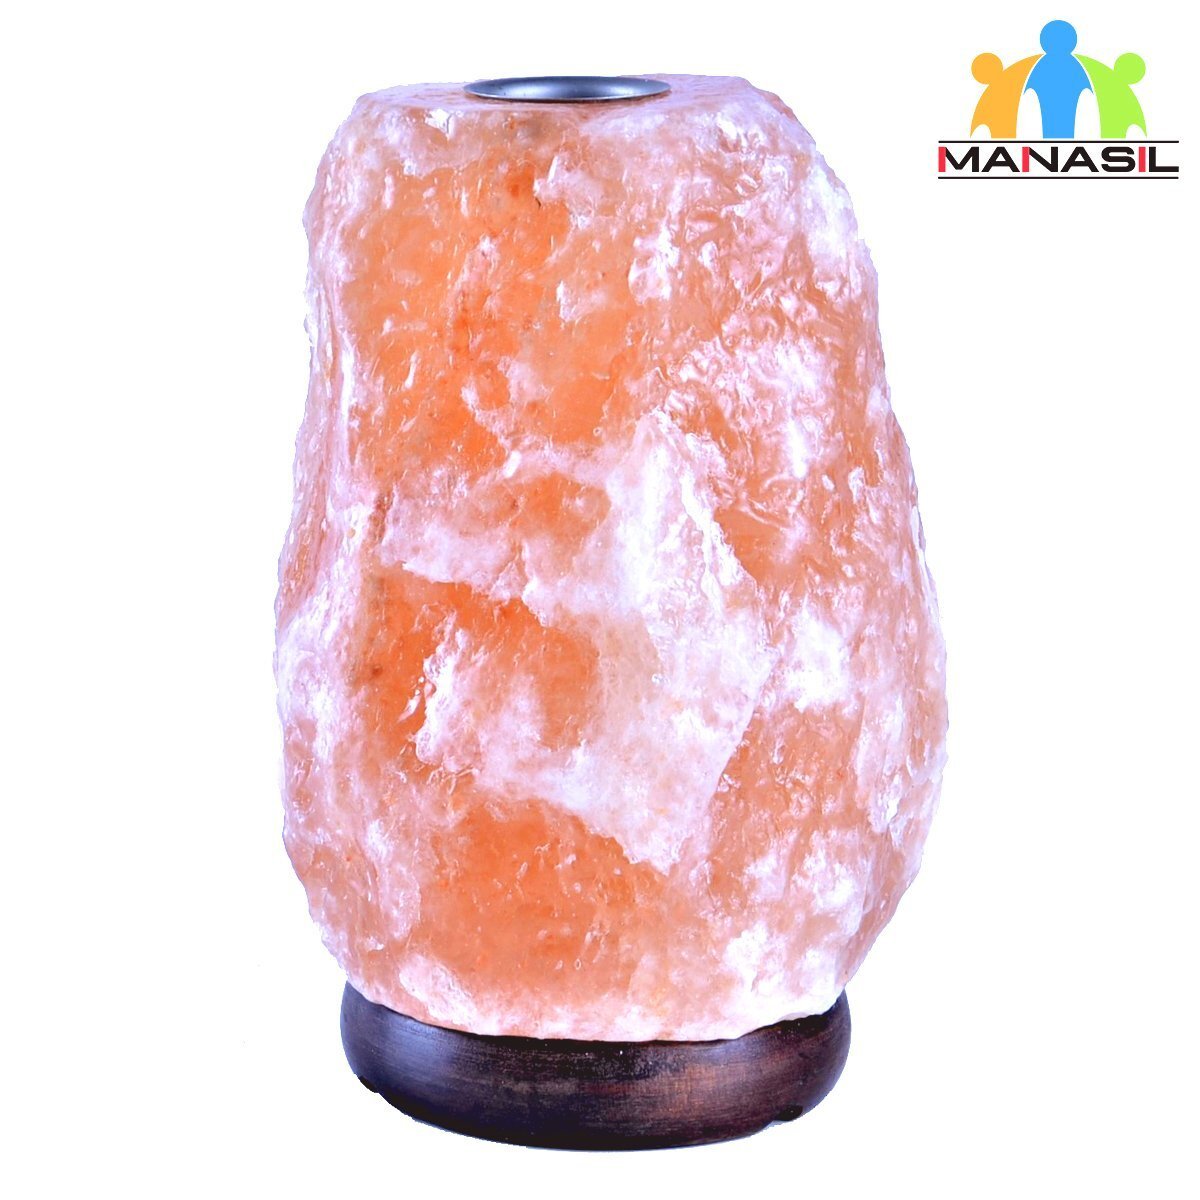 Eod-02 9 In. Aroma Oil Diffuser Himalayan Salt Natural Lamp - 11-12 Lbs